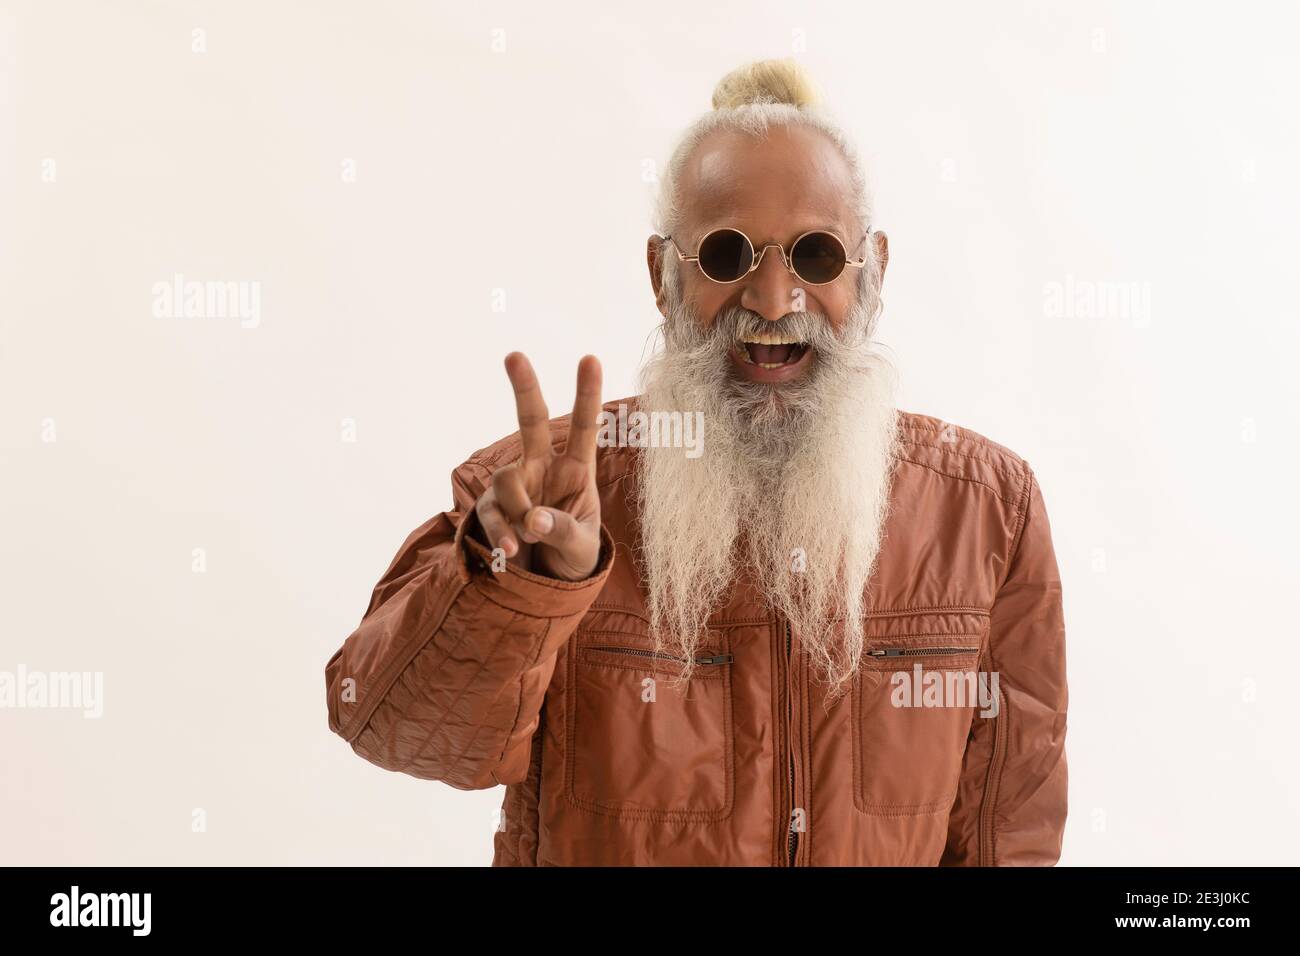 A STYLISH OLD MAN HAPPILY GESTURING AT CAMERA Stock Photo